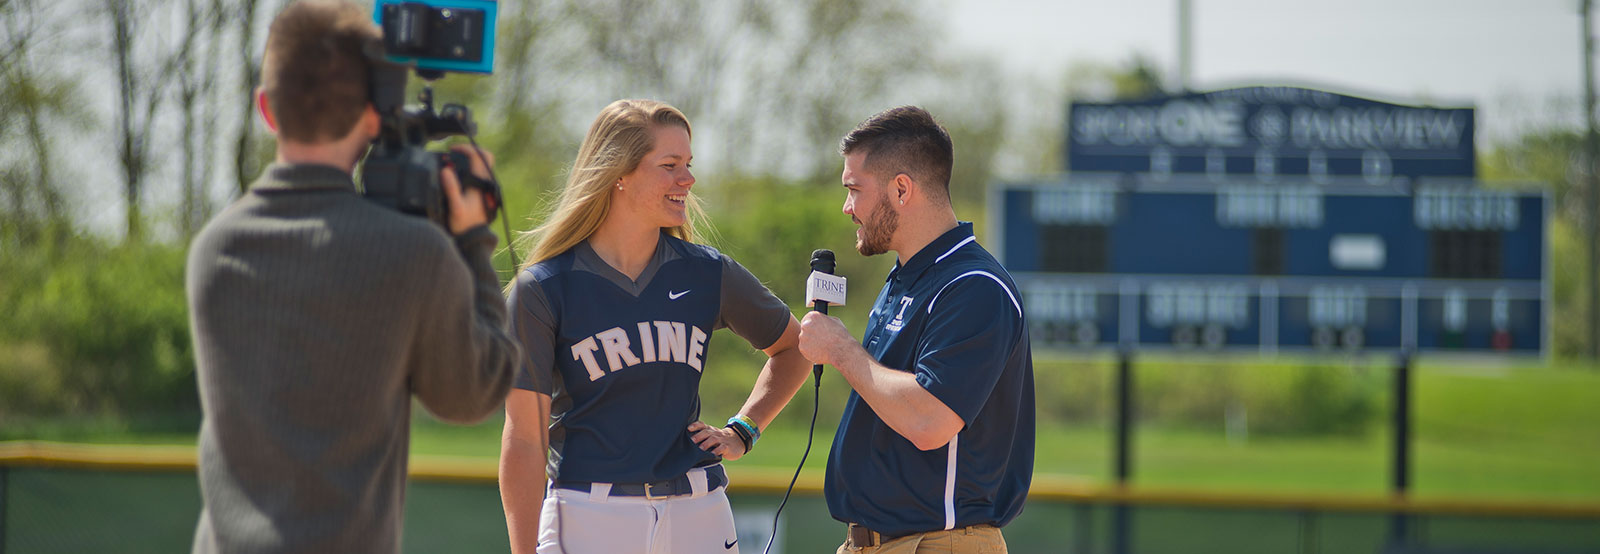 Student interviewing a softball player